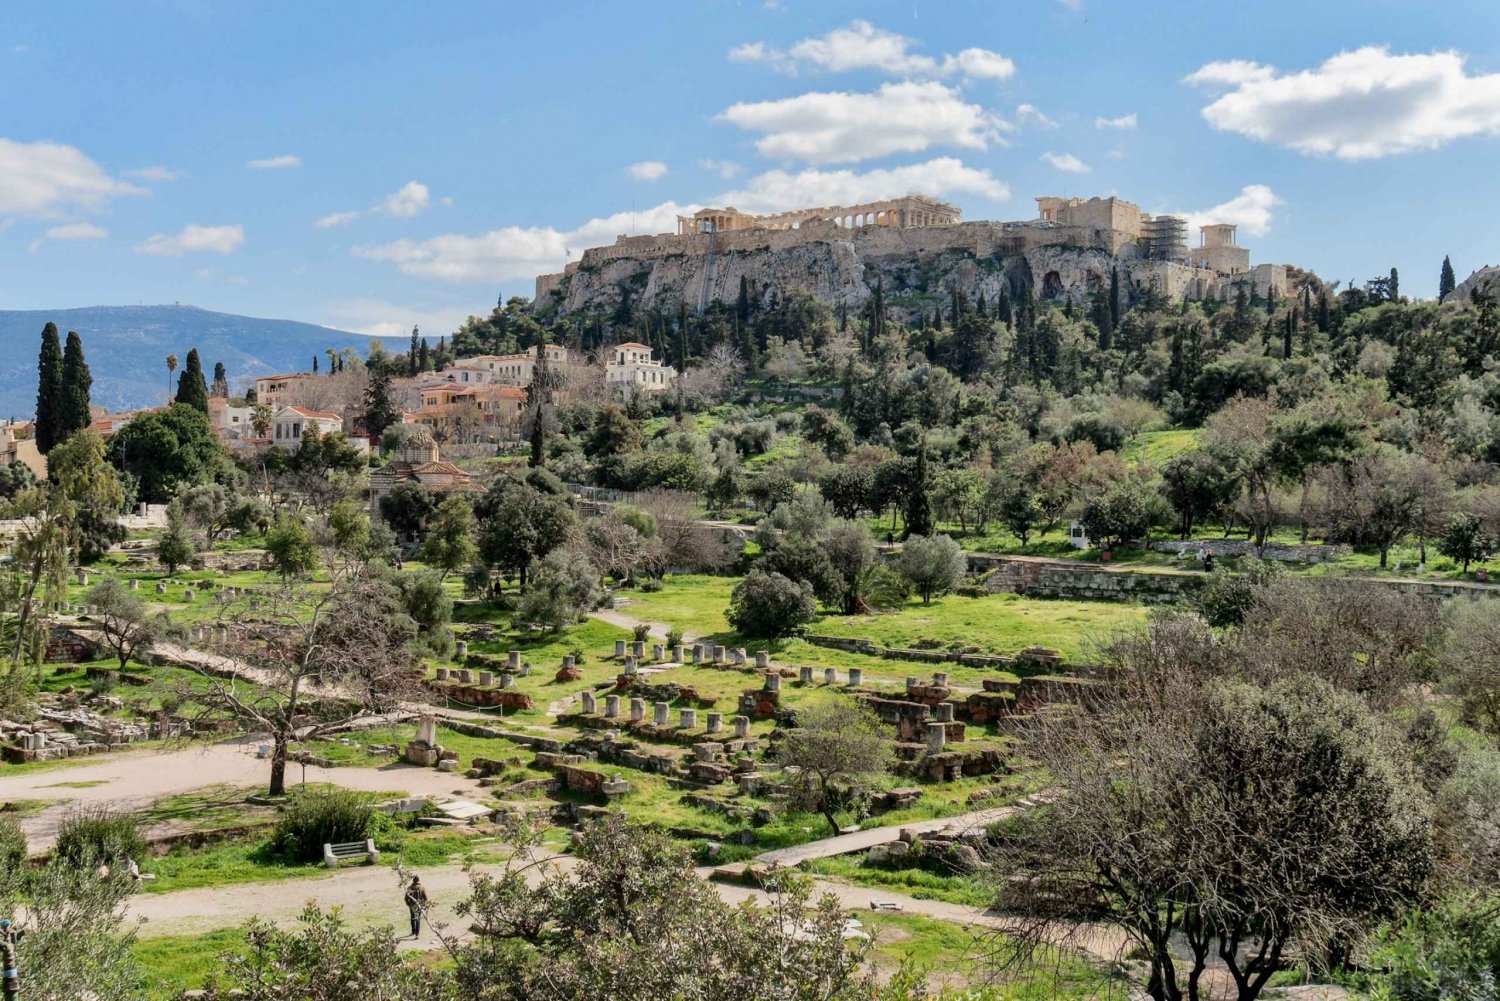 Atene: Acropoli e 6 siti archeologici: biglietto cumulativo